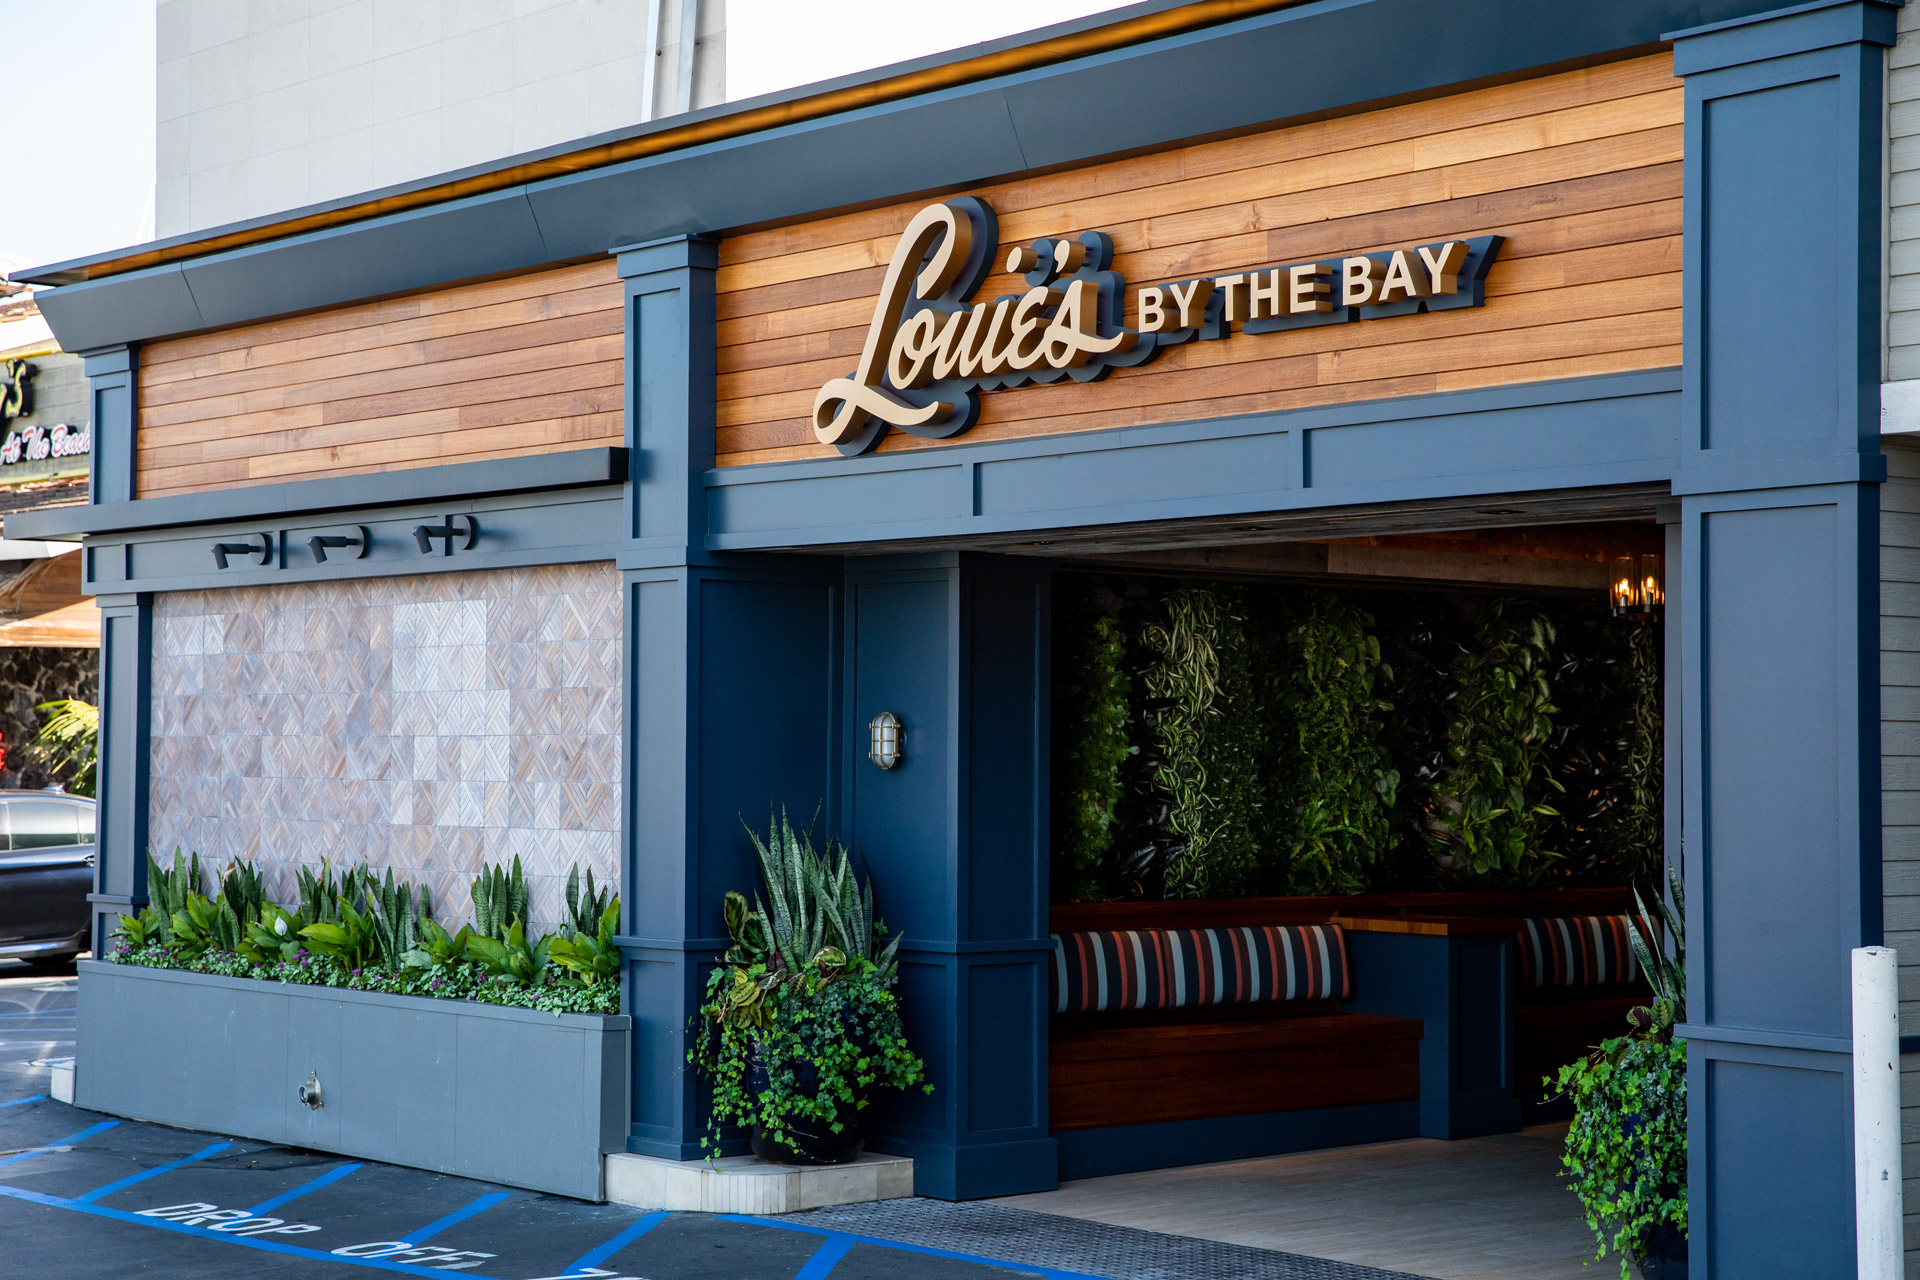 Louie S By The Bay Restaurant Branding Hoodzpah